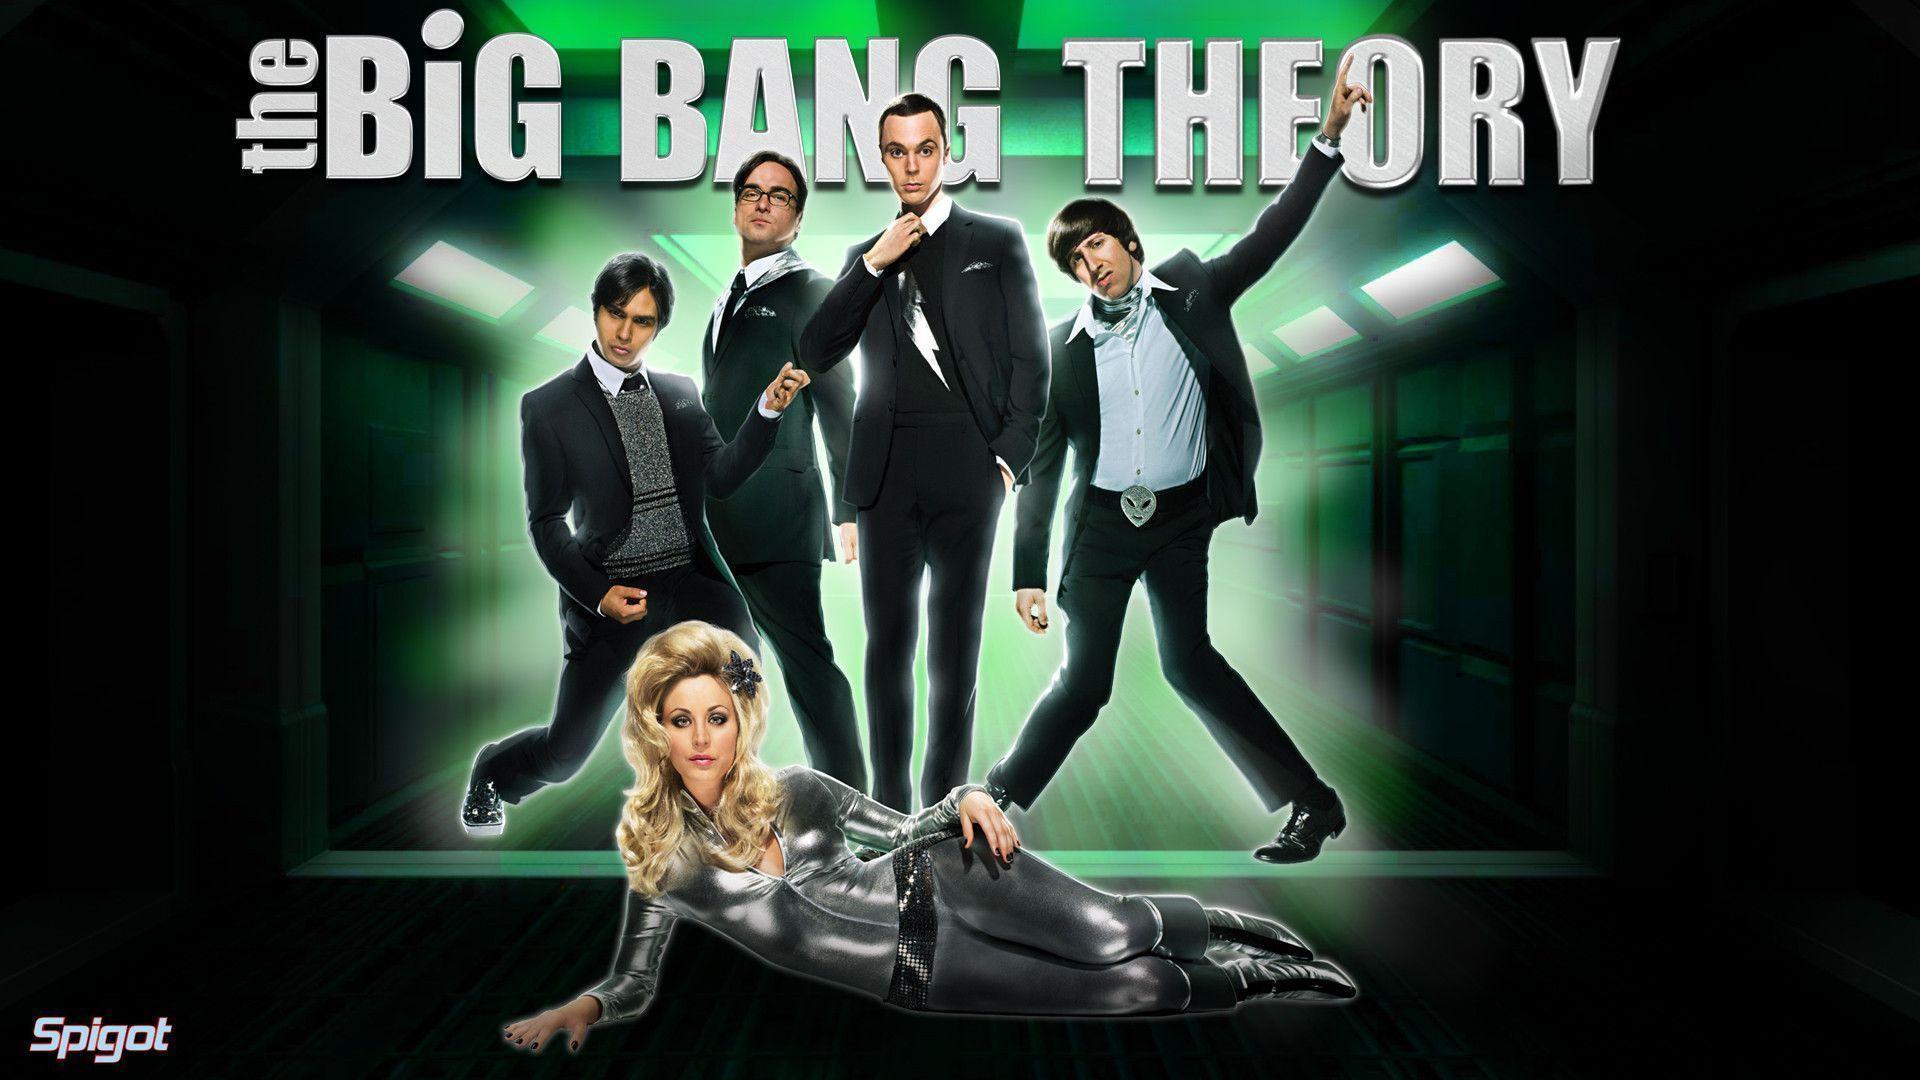 The Big Bang Theory Wallpaper. George Spigot&;s Blog